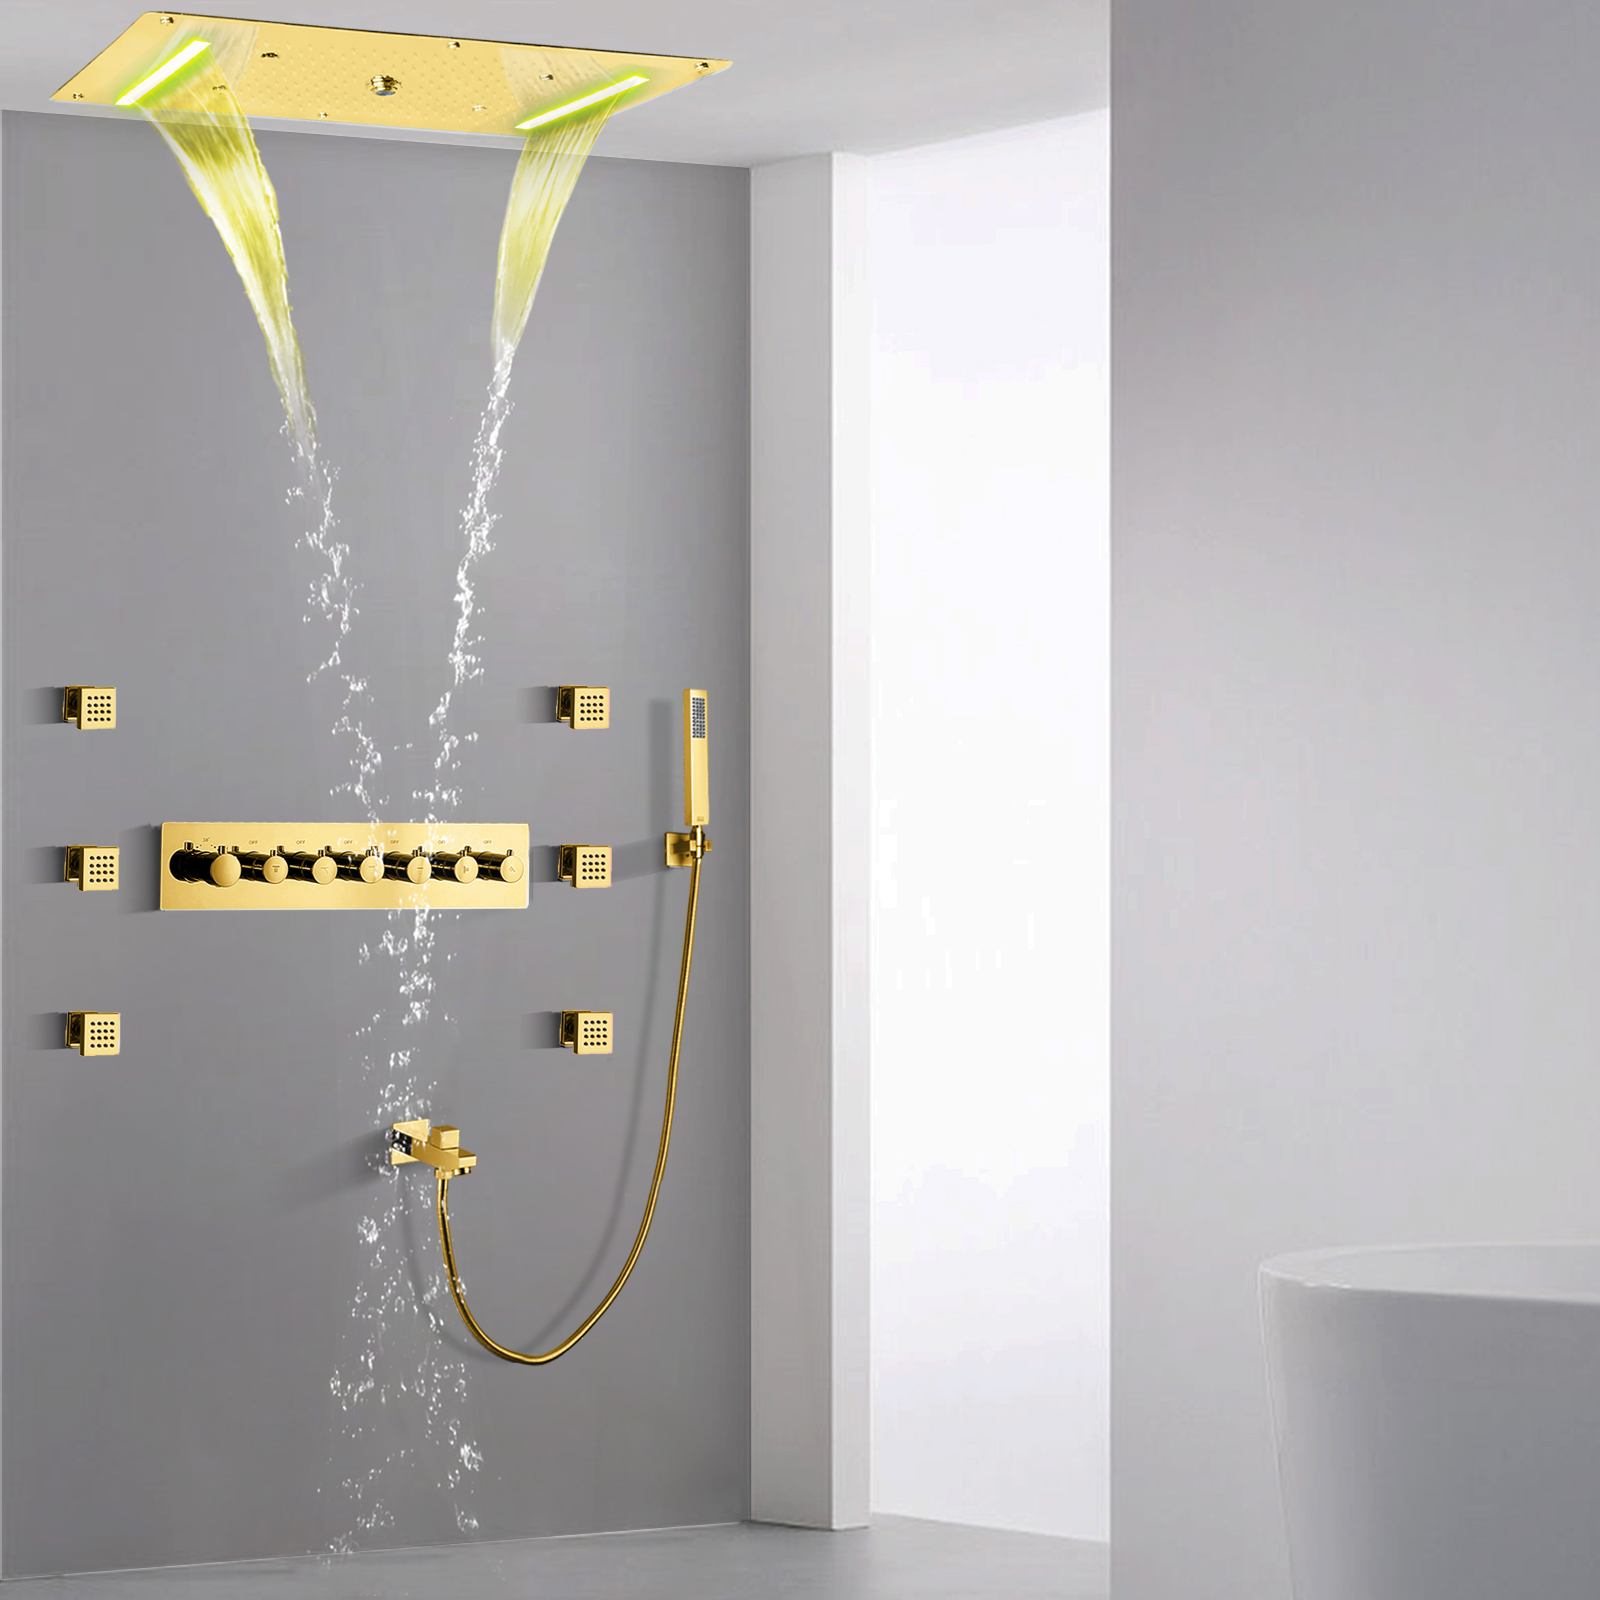 70X38 Cm Titanium Gold LED Thermostatic Shower Set Mixer Massage Rainfall Waterfall With Handheld